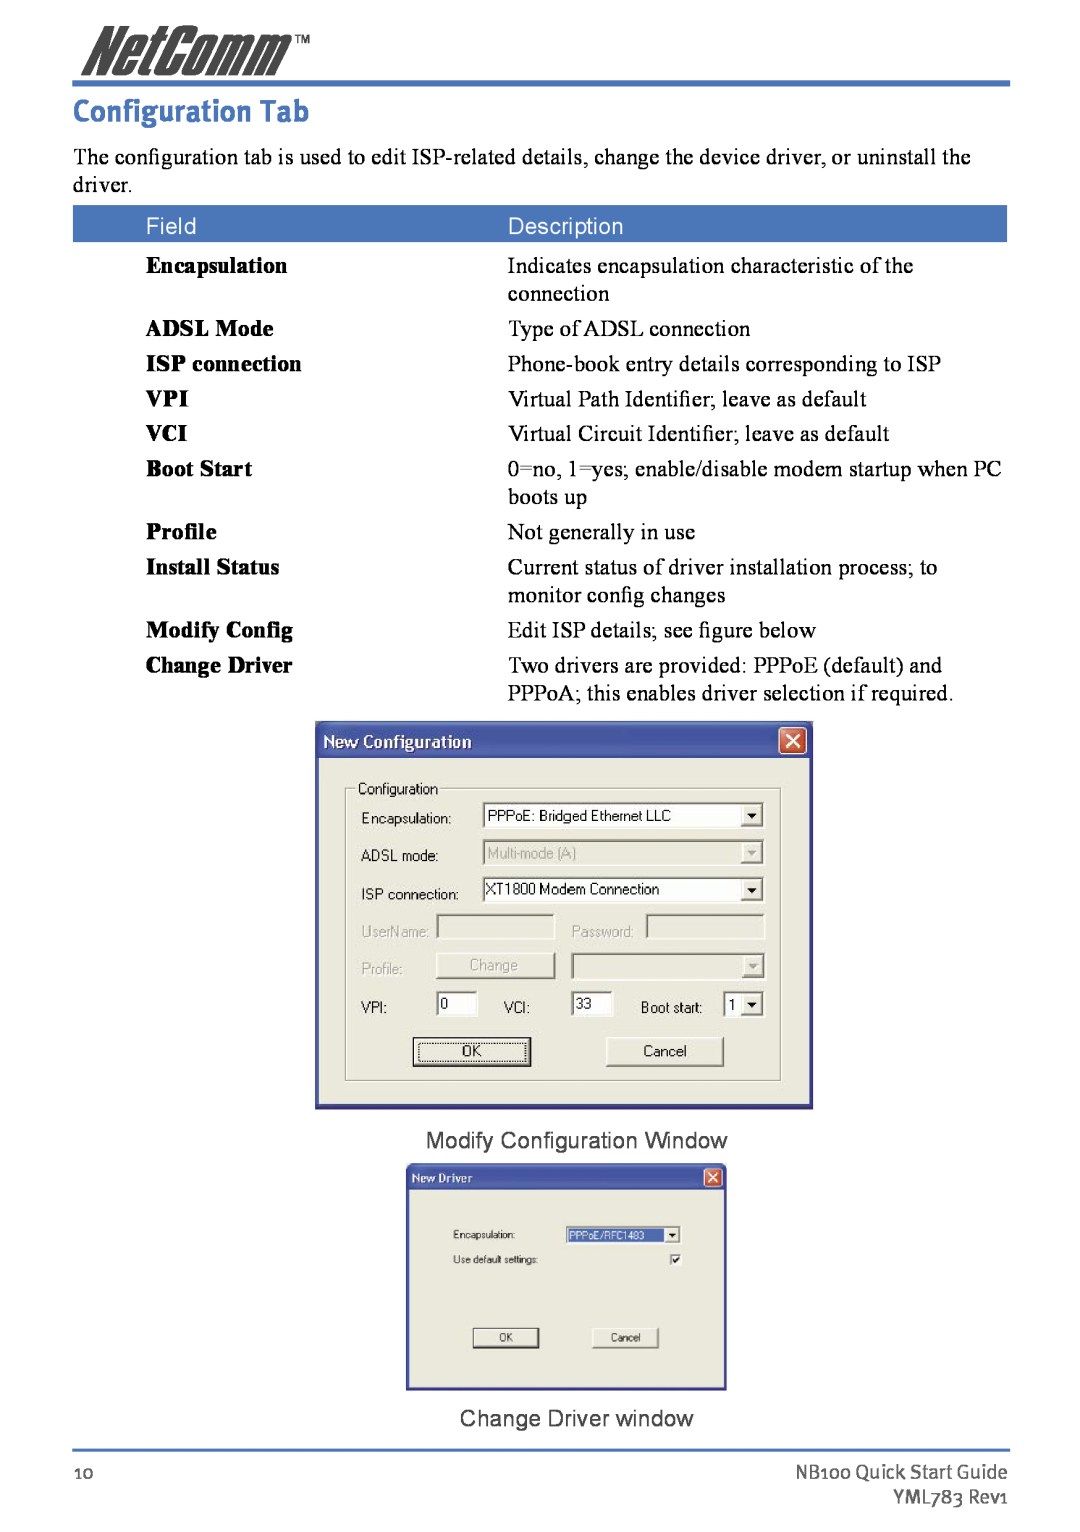 NetComm NB100 manual Configuration Tab, Field, Description, Modify Conﬁguration Window Change Driver window 